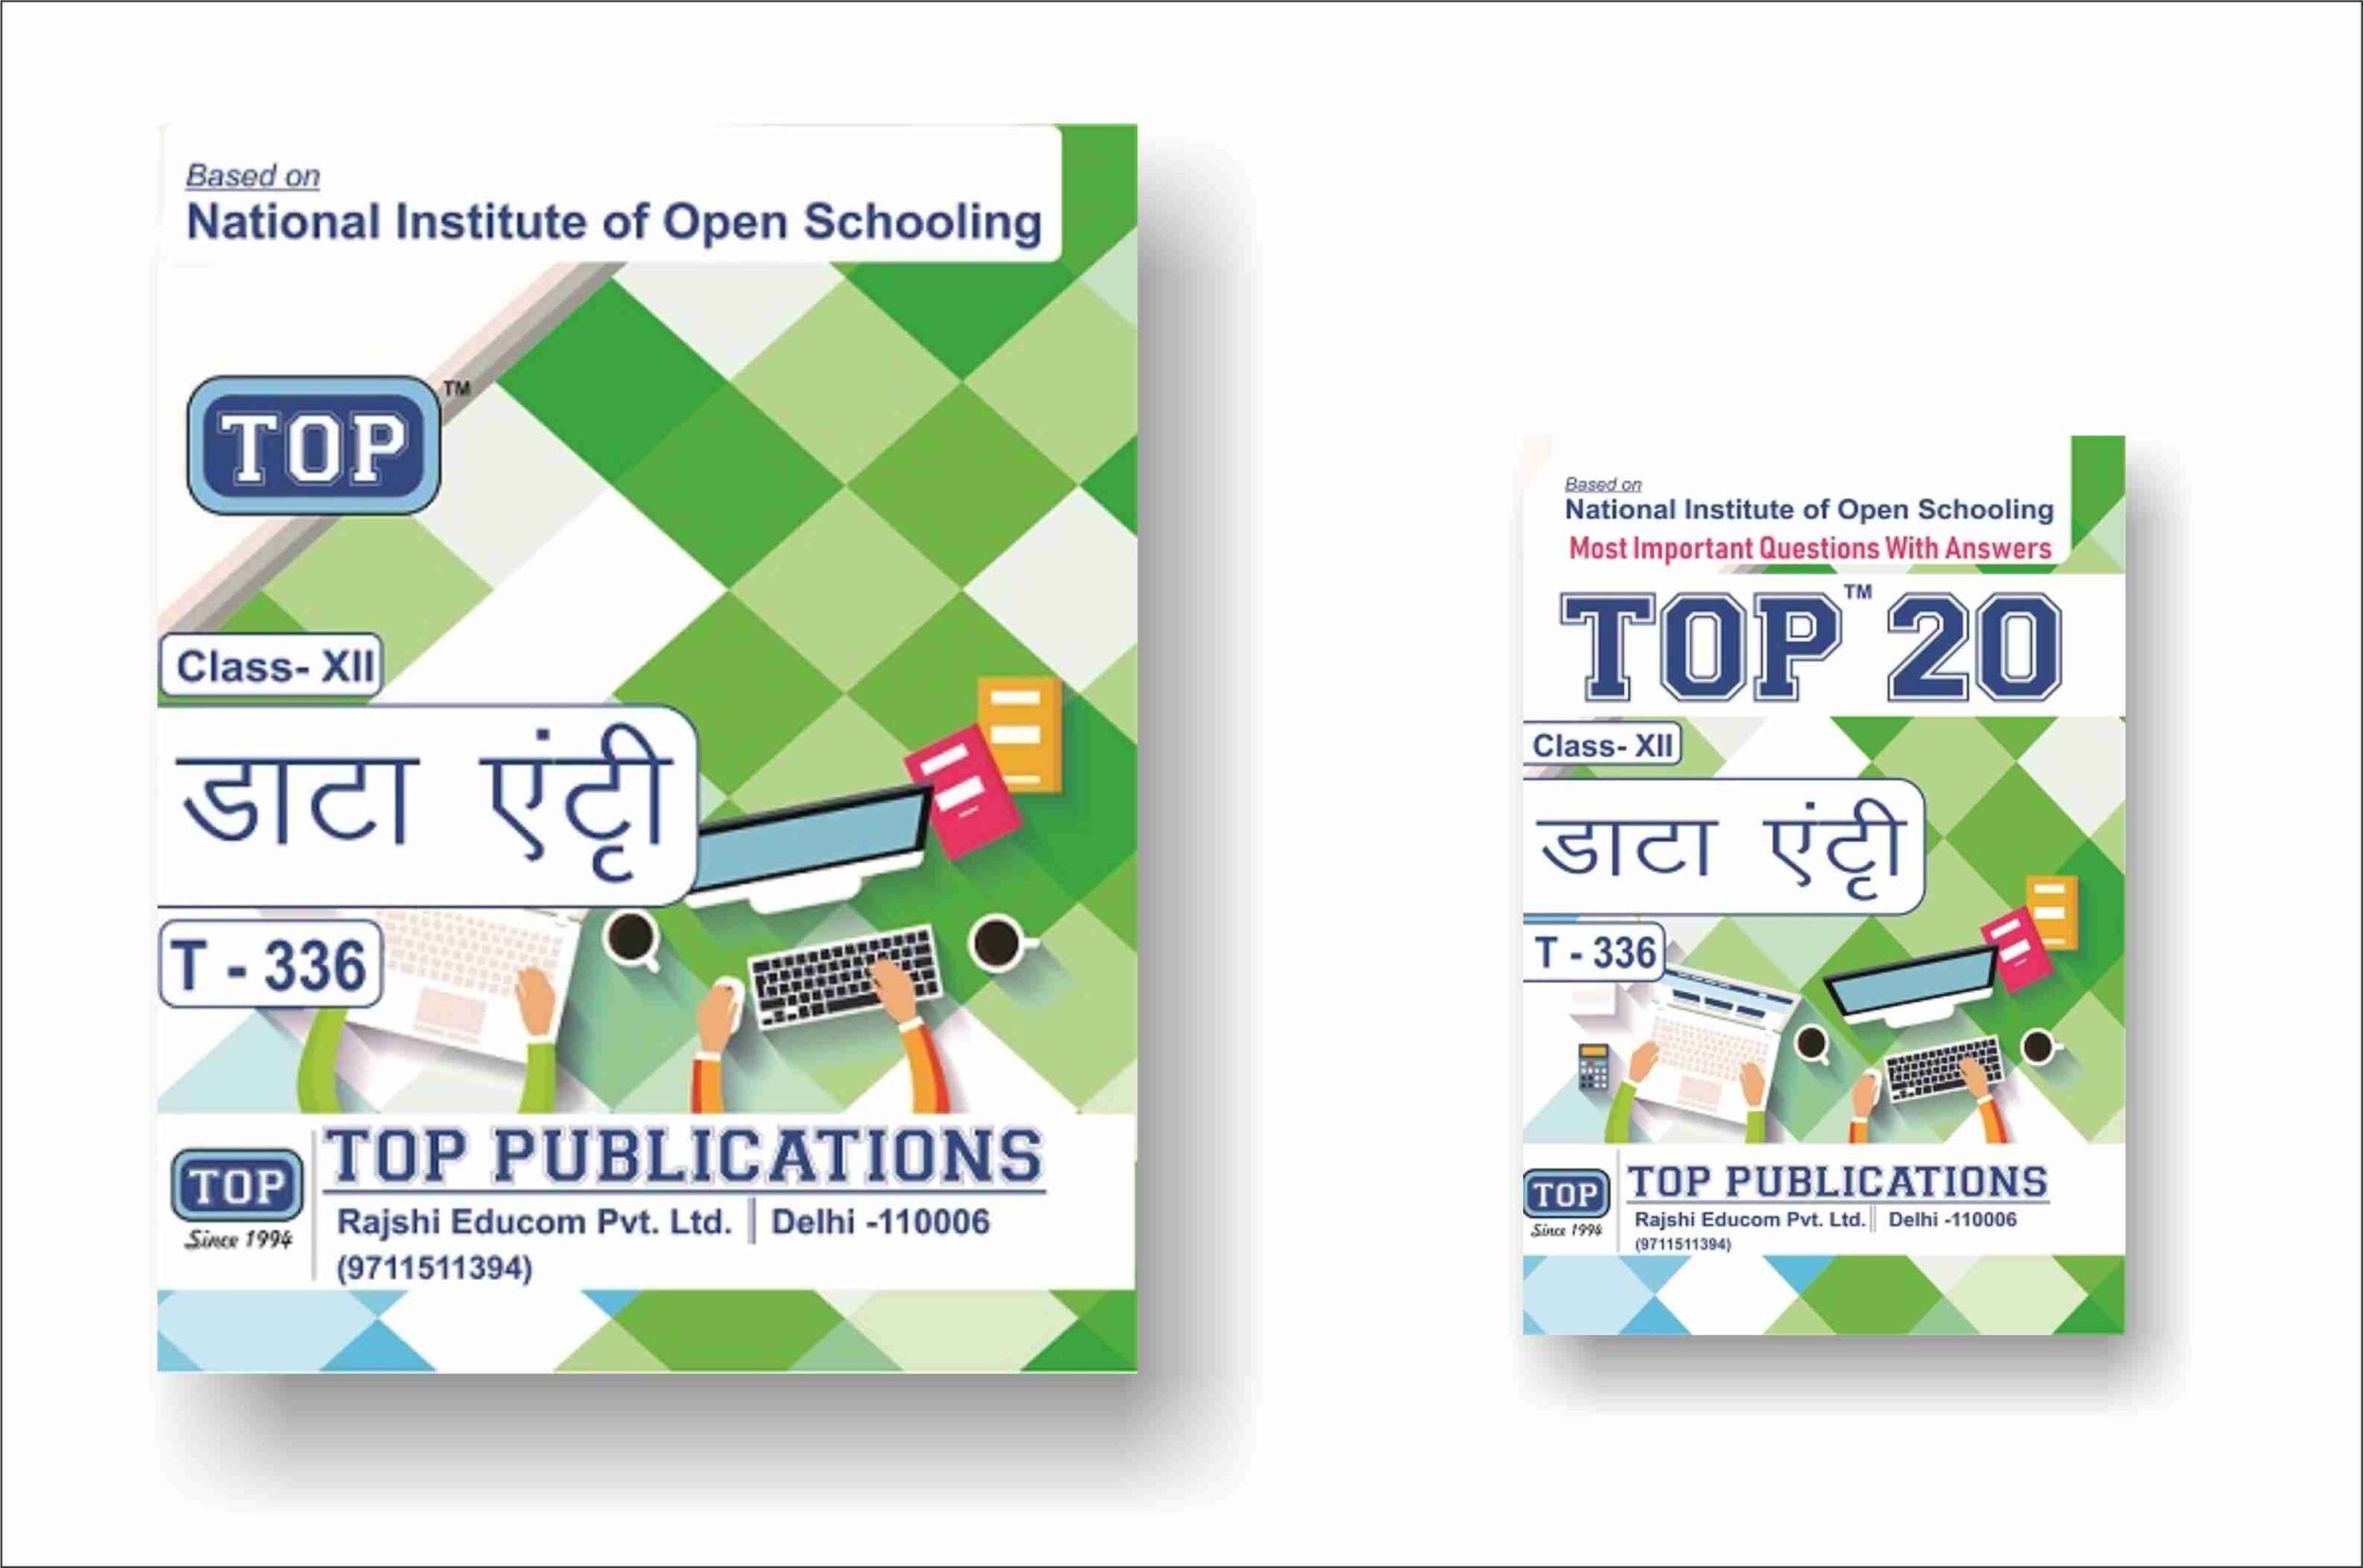 10th-nios-books, 12th-nios-books, b.ed-ignou-books, ba-sociology-ignou-books-pdf, bca-ignou-books, books-for-political-science-honours-delhi-university-syllabus, ccs-university-books-in-delhi, d.el.ed-nios-books, delhi-open-university-books, delhi-university-bcom-books-pdf, delhi-university-book-written-by, delhi-university-books-free-download, delhi-university-books-in-hindi, delhi-university-books-online, delhi-university-books-pdf, delhi-university-books-shop, delhi-university-history-books, delhi-university-history-books-pdf, delhi-university-publication-books, delhi-university-study-material-pdf, du-sol-books, du-study-material-ba-programme, egyankosh-ignou-study-material, gullybaba-ignou-books, gullybaba-ignou-books-pdf-free-download, how-to-get-ignou-books-offline, how-to-get-ignou-study-material-hard-copy, ignou-b.ed-books-pdf-in-hindi, ignou-bca-books, ignou-bed-books, ignou-blis-books-in-hindi-pdf-download, ignou-books, ignou-books-download, ignou-books-download-egyankosh, ignou-books-download-in-hindi, ignou-books-for-upsc, ignou-books-in-hindi, ignou-books-near-me, ignou-books-not-received, ignou-books-pdf, ignou-books-pdf-in-hindi, ignou-books-status, ignou-books-status-july-2022, ignou-e-books, ignou-guide-books-pdf-free-download, ignou-history-books-pdf, ignou-ma-history-books-pdf-in-hindi, ignou-mba-books, ignou-sociology-ba-books-pdf, ignou-study-material-in-hindi, ignou-study-material-online, mba-ignou-books, mcom-ignou-books, neeraj-ignou-books, neeraj-ignou-books-pdf-free-download, neeraj-publications-ignou-books-pdf-download, nios-10th-books, nios-10th-books-in-hindi-medium-download, nios-12-books, nios-books, nios-books-for-class-10, nios-books-for-class-10-free-download-pdf, nios-books-for-class-10-pdf, nios-books-for-class-11, nios-books-for-class-12, nios-books-for-class-12-pdf, nios-books-for-class-12-pdf-download, nios-books-for-dsssb-prt, nios-books-for-upsc, nios-books-free-download-pdf, nios-books-in-hindi, nios-books-in-hindi-medium-download-pdf, nios-books-pdf, nios-books-pdf-in-english, nios-class-10-books-pdf-download, nios-d.el.ed-books-in-hindi-pdf, nios-deled-books, nios-guide-books-for-class-12, nios.ac.in-books, where-to-buy-delhi-university-books